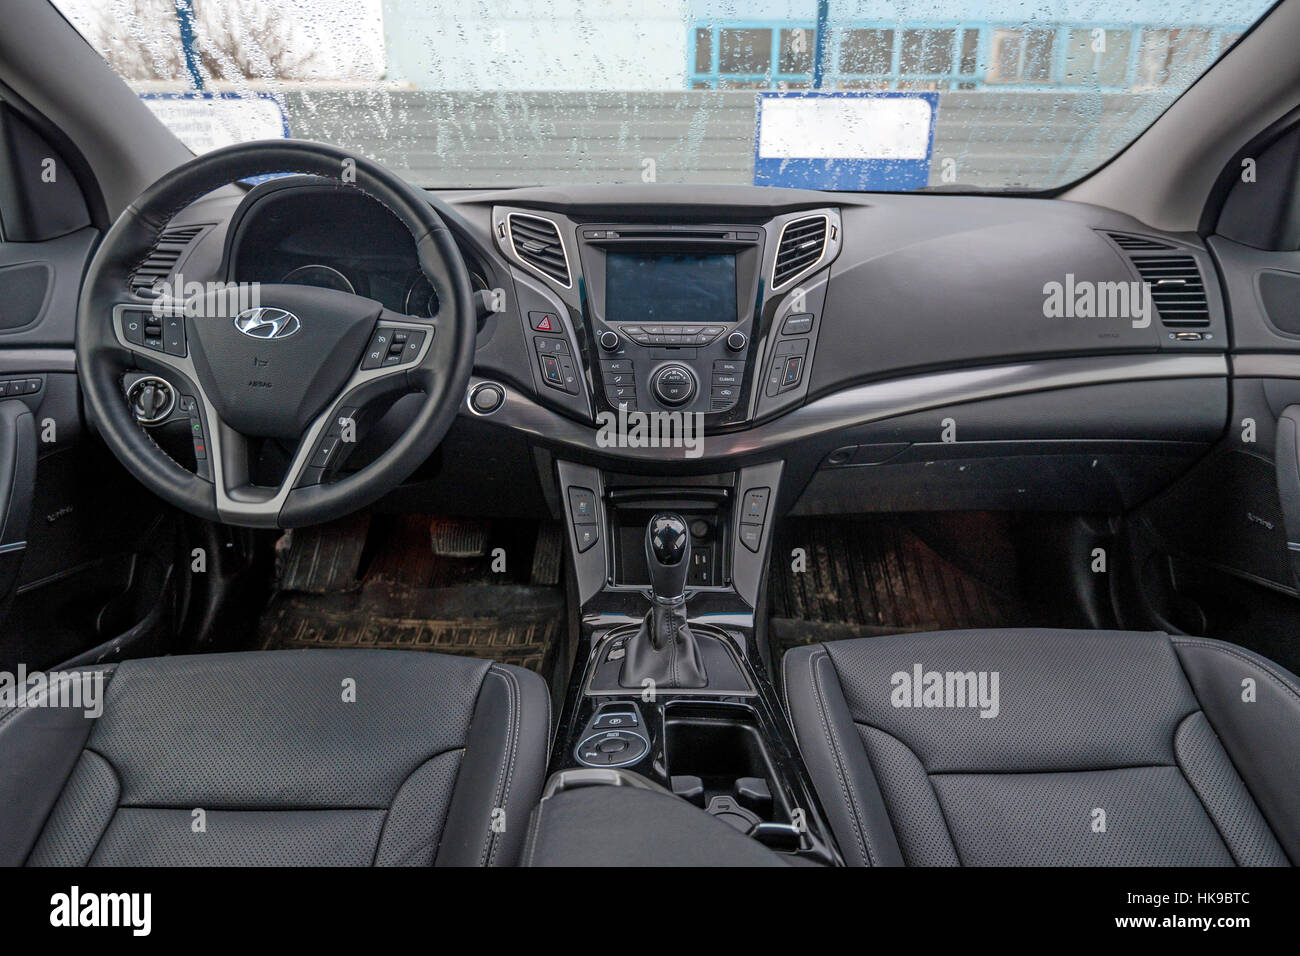 Hyundai i40 hi-res stock photography and images - Alamy